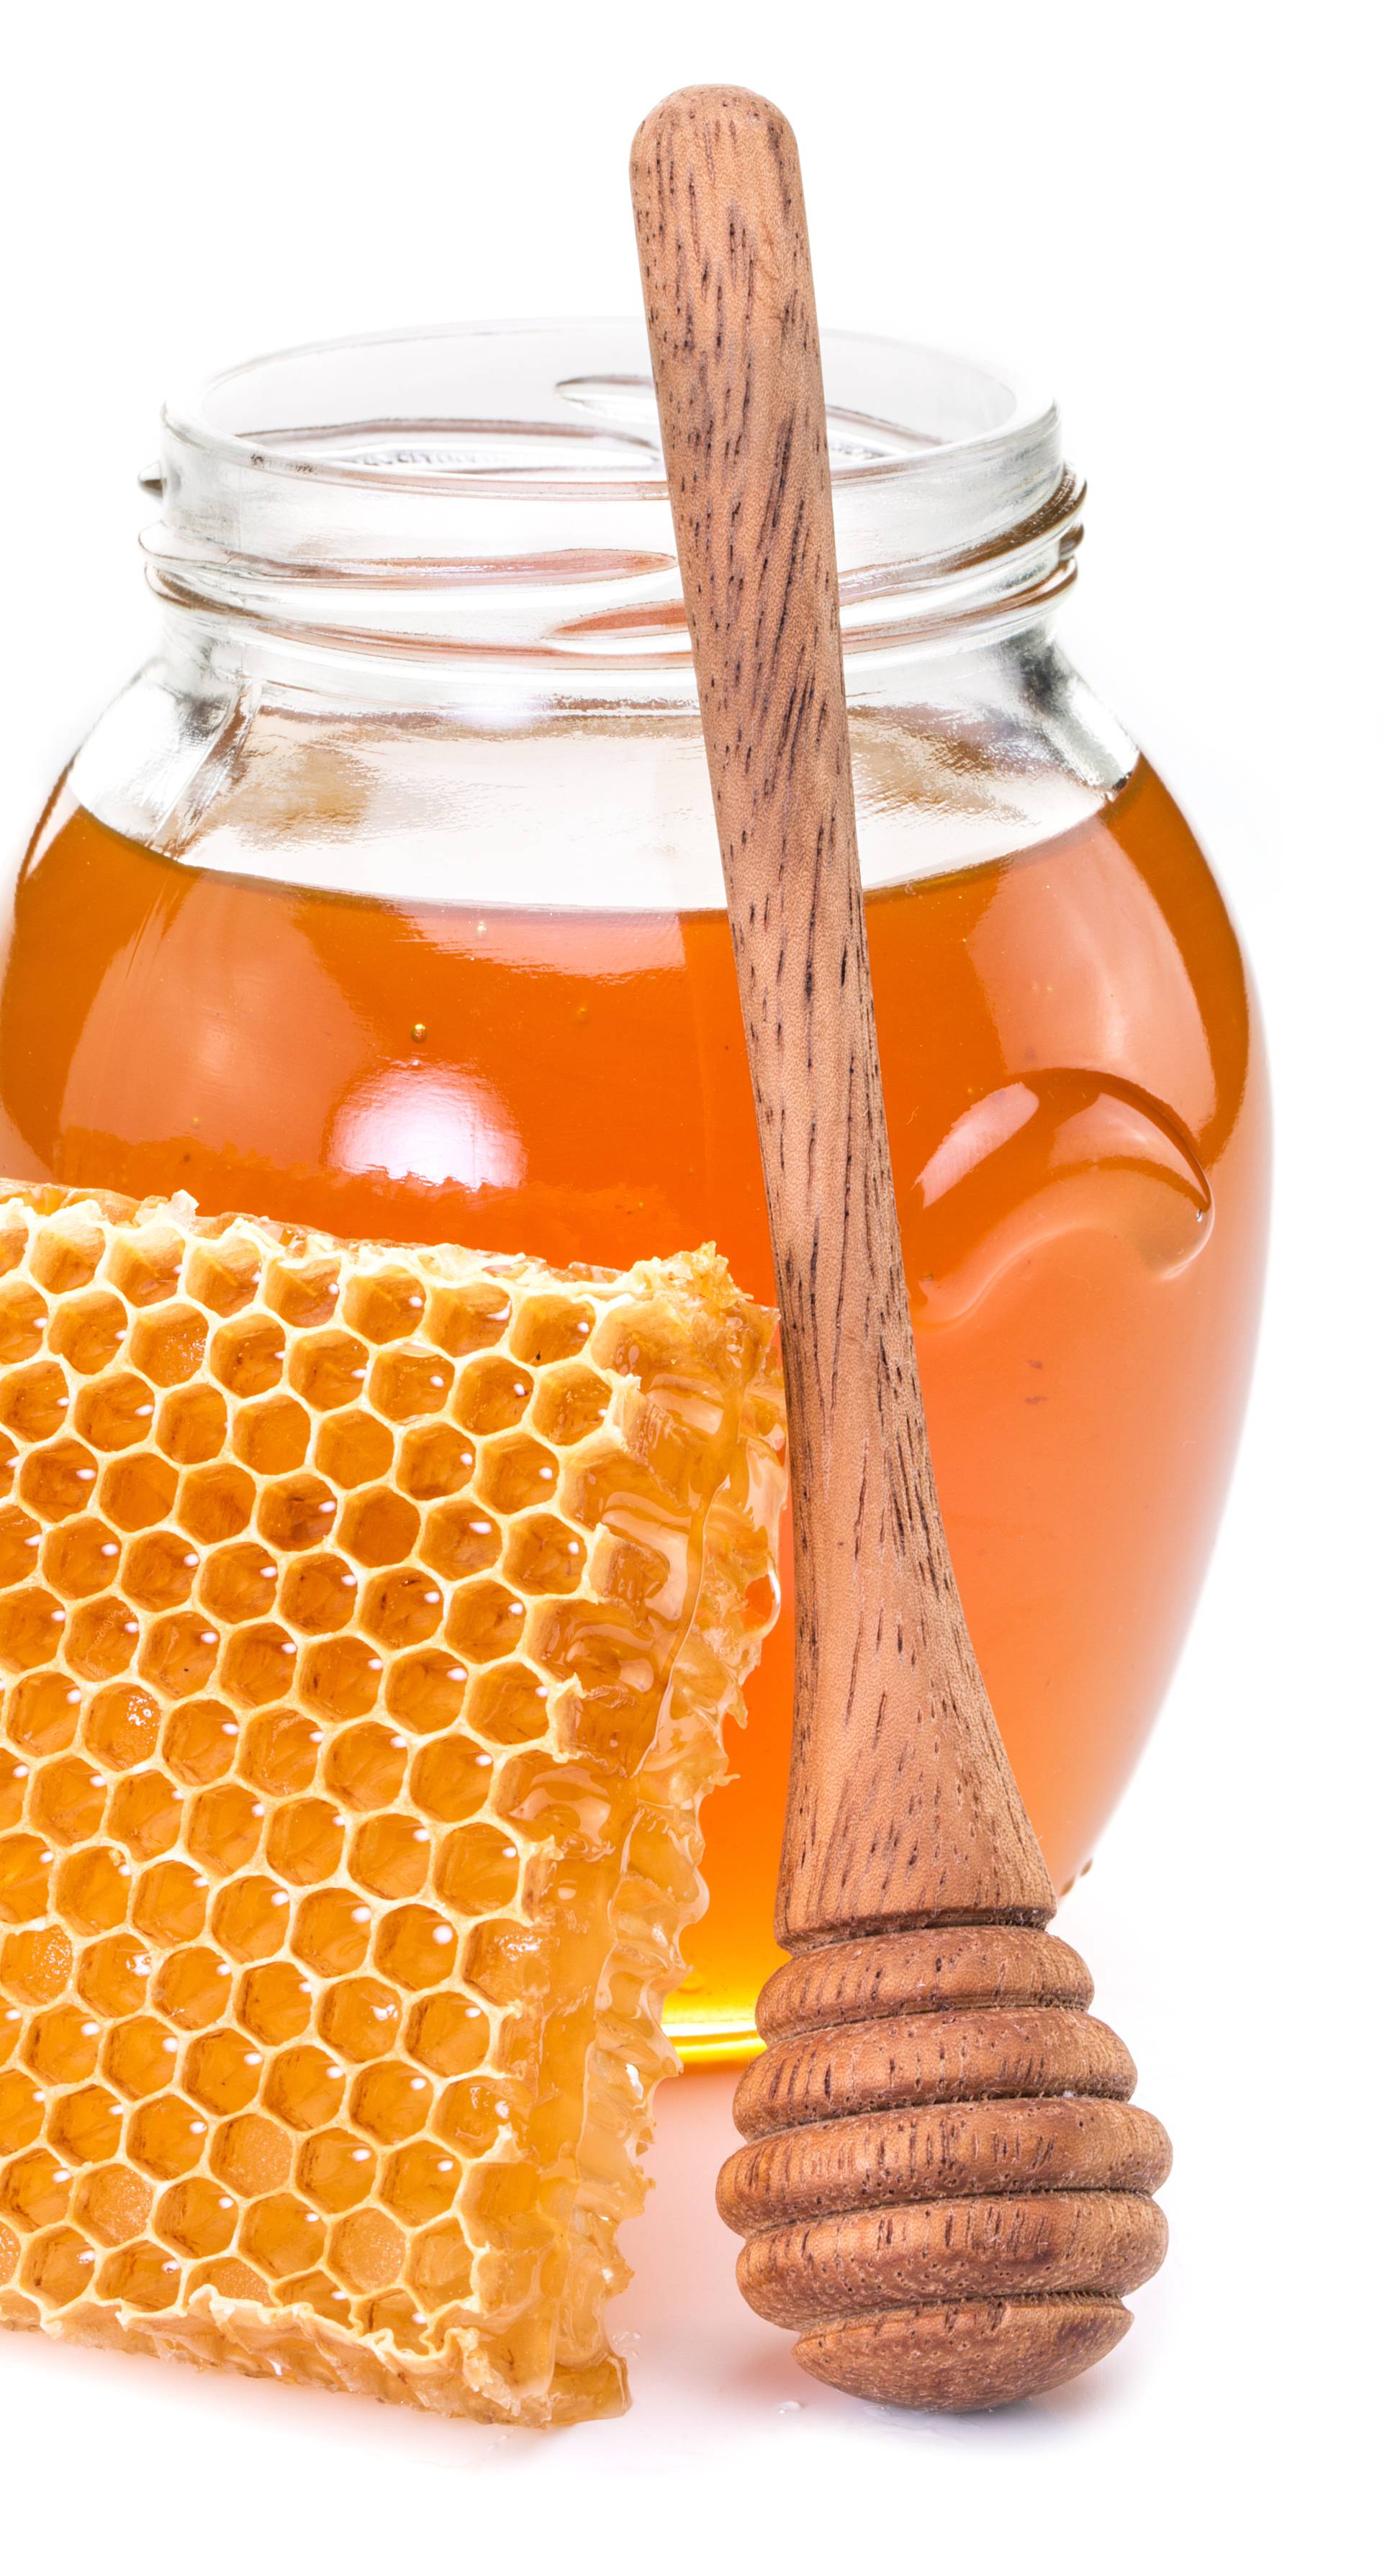 Jar full of fresh honey and honeycombs.